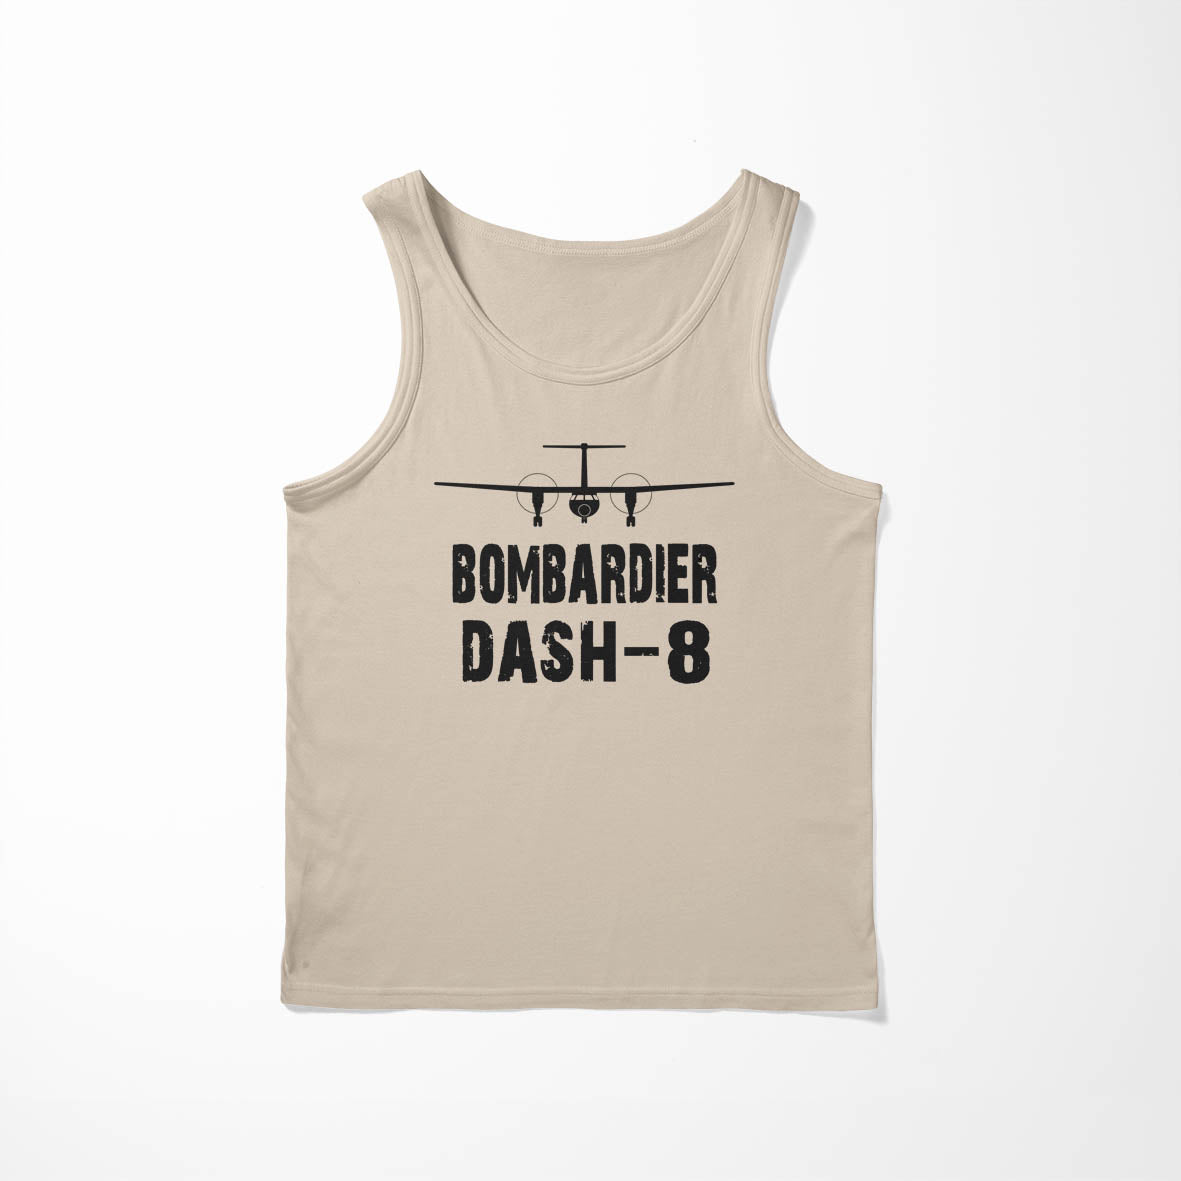 Bombardier Dash-8 & Plane Designed Tank Tops